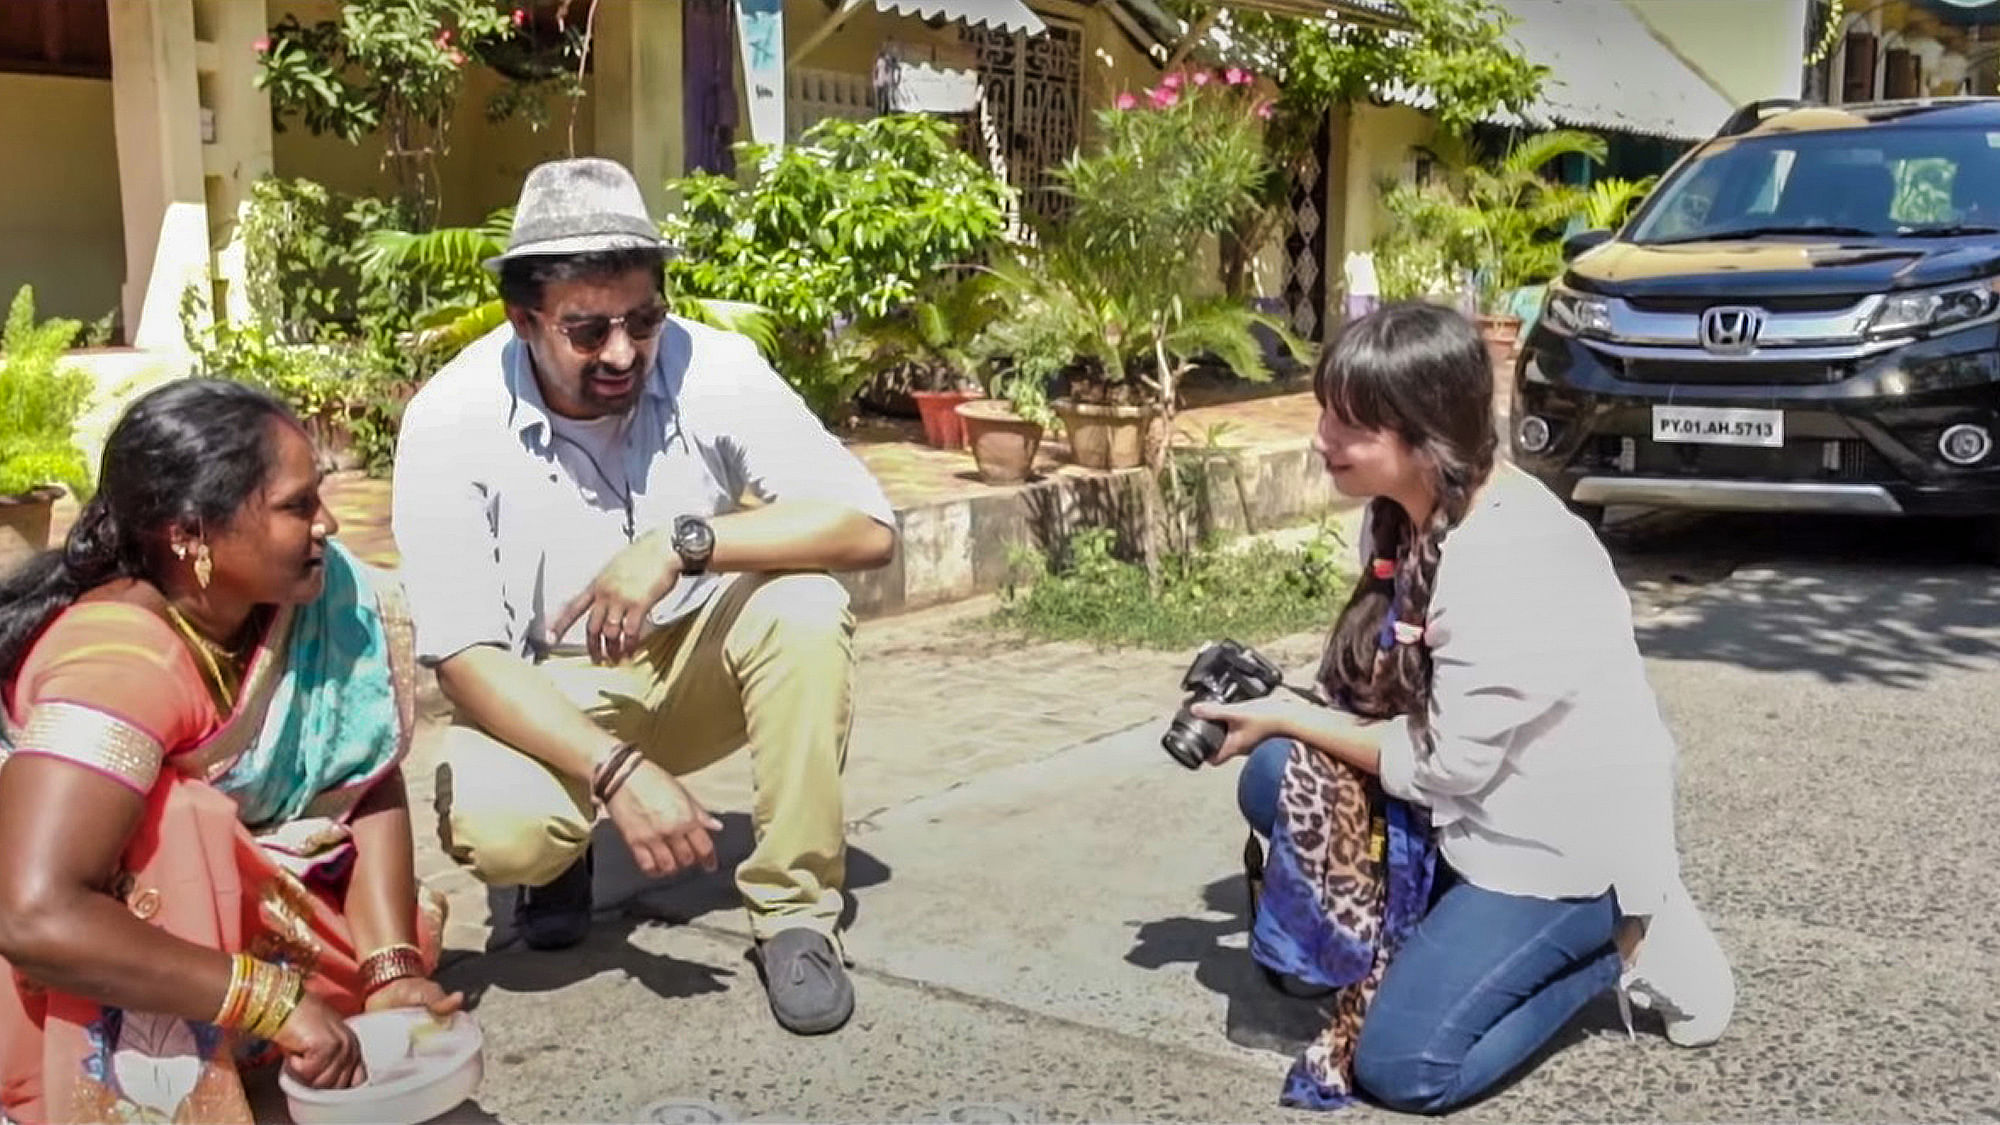 Adventurer Rajeel with Rannvijay Singh on her photography challenge. (Photo: Honda BR-V)